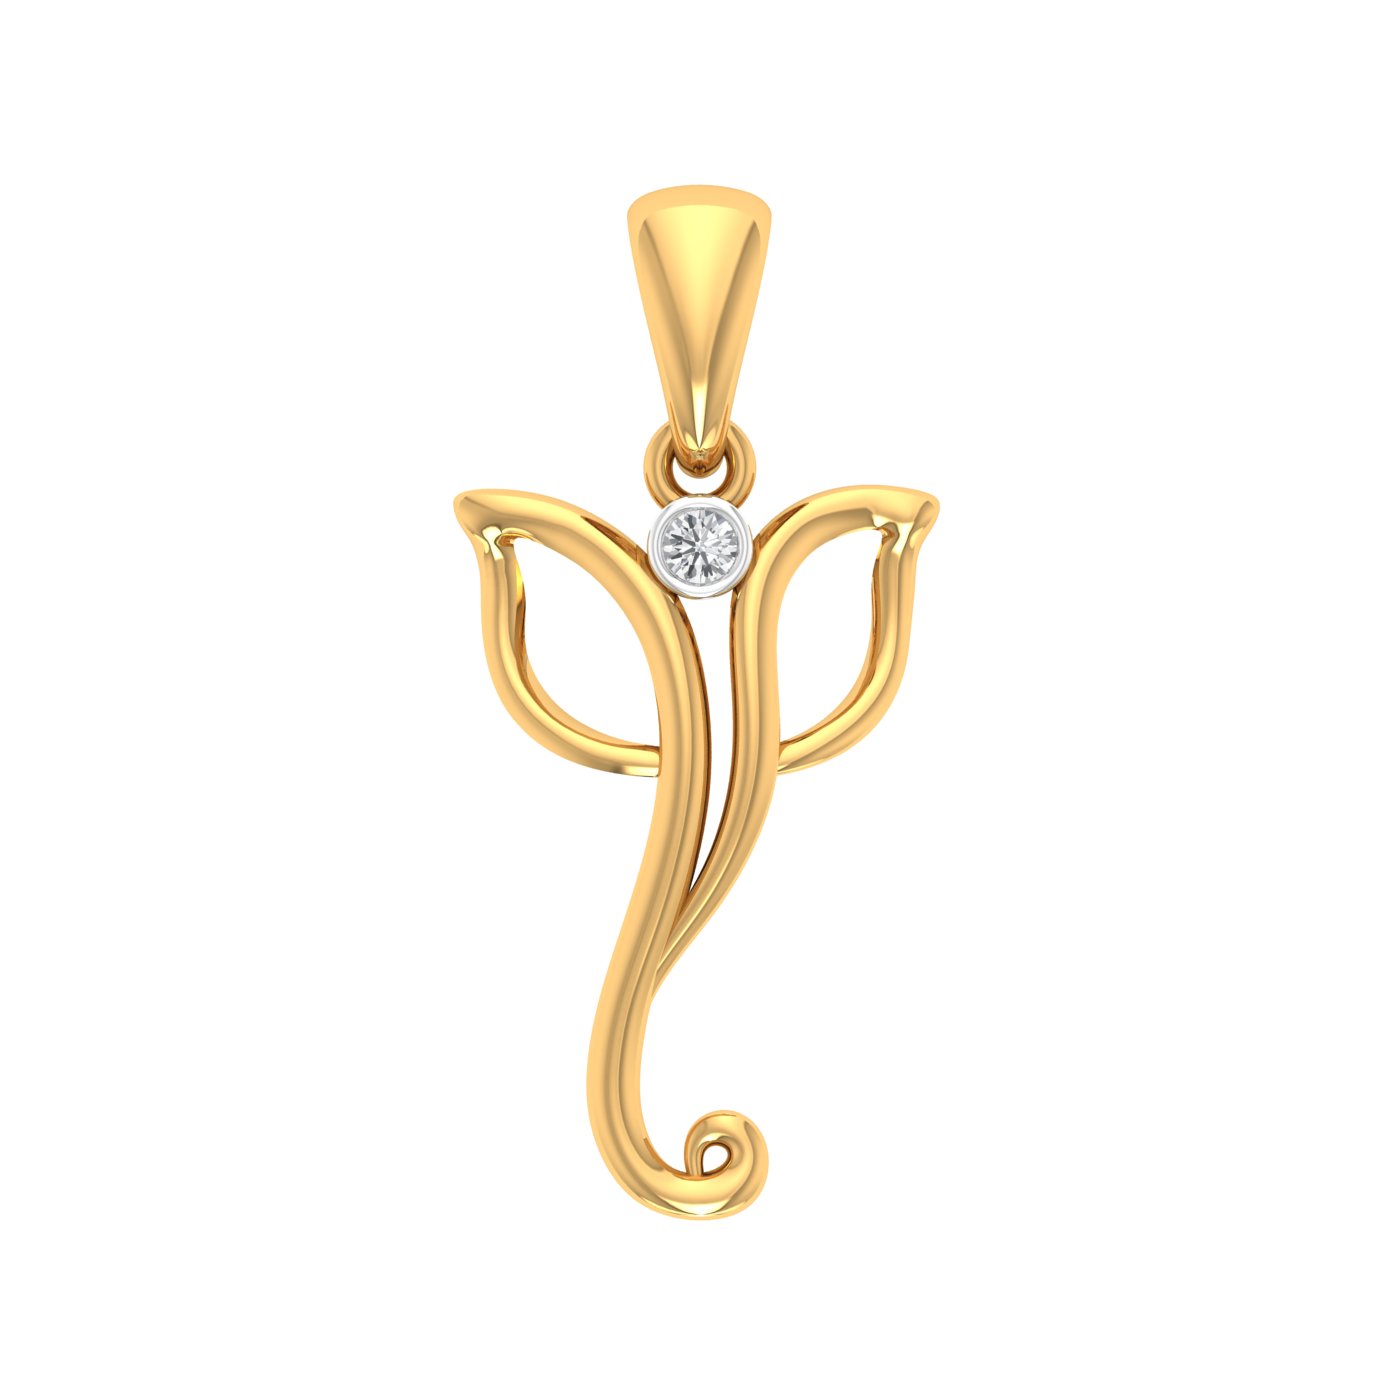 10 Exclusive Lord Ganesha Gold Pendant Designs | single stone pendant 